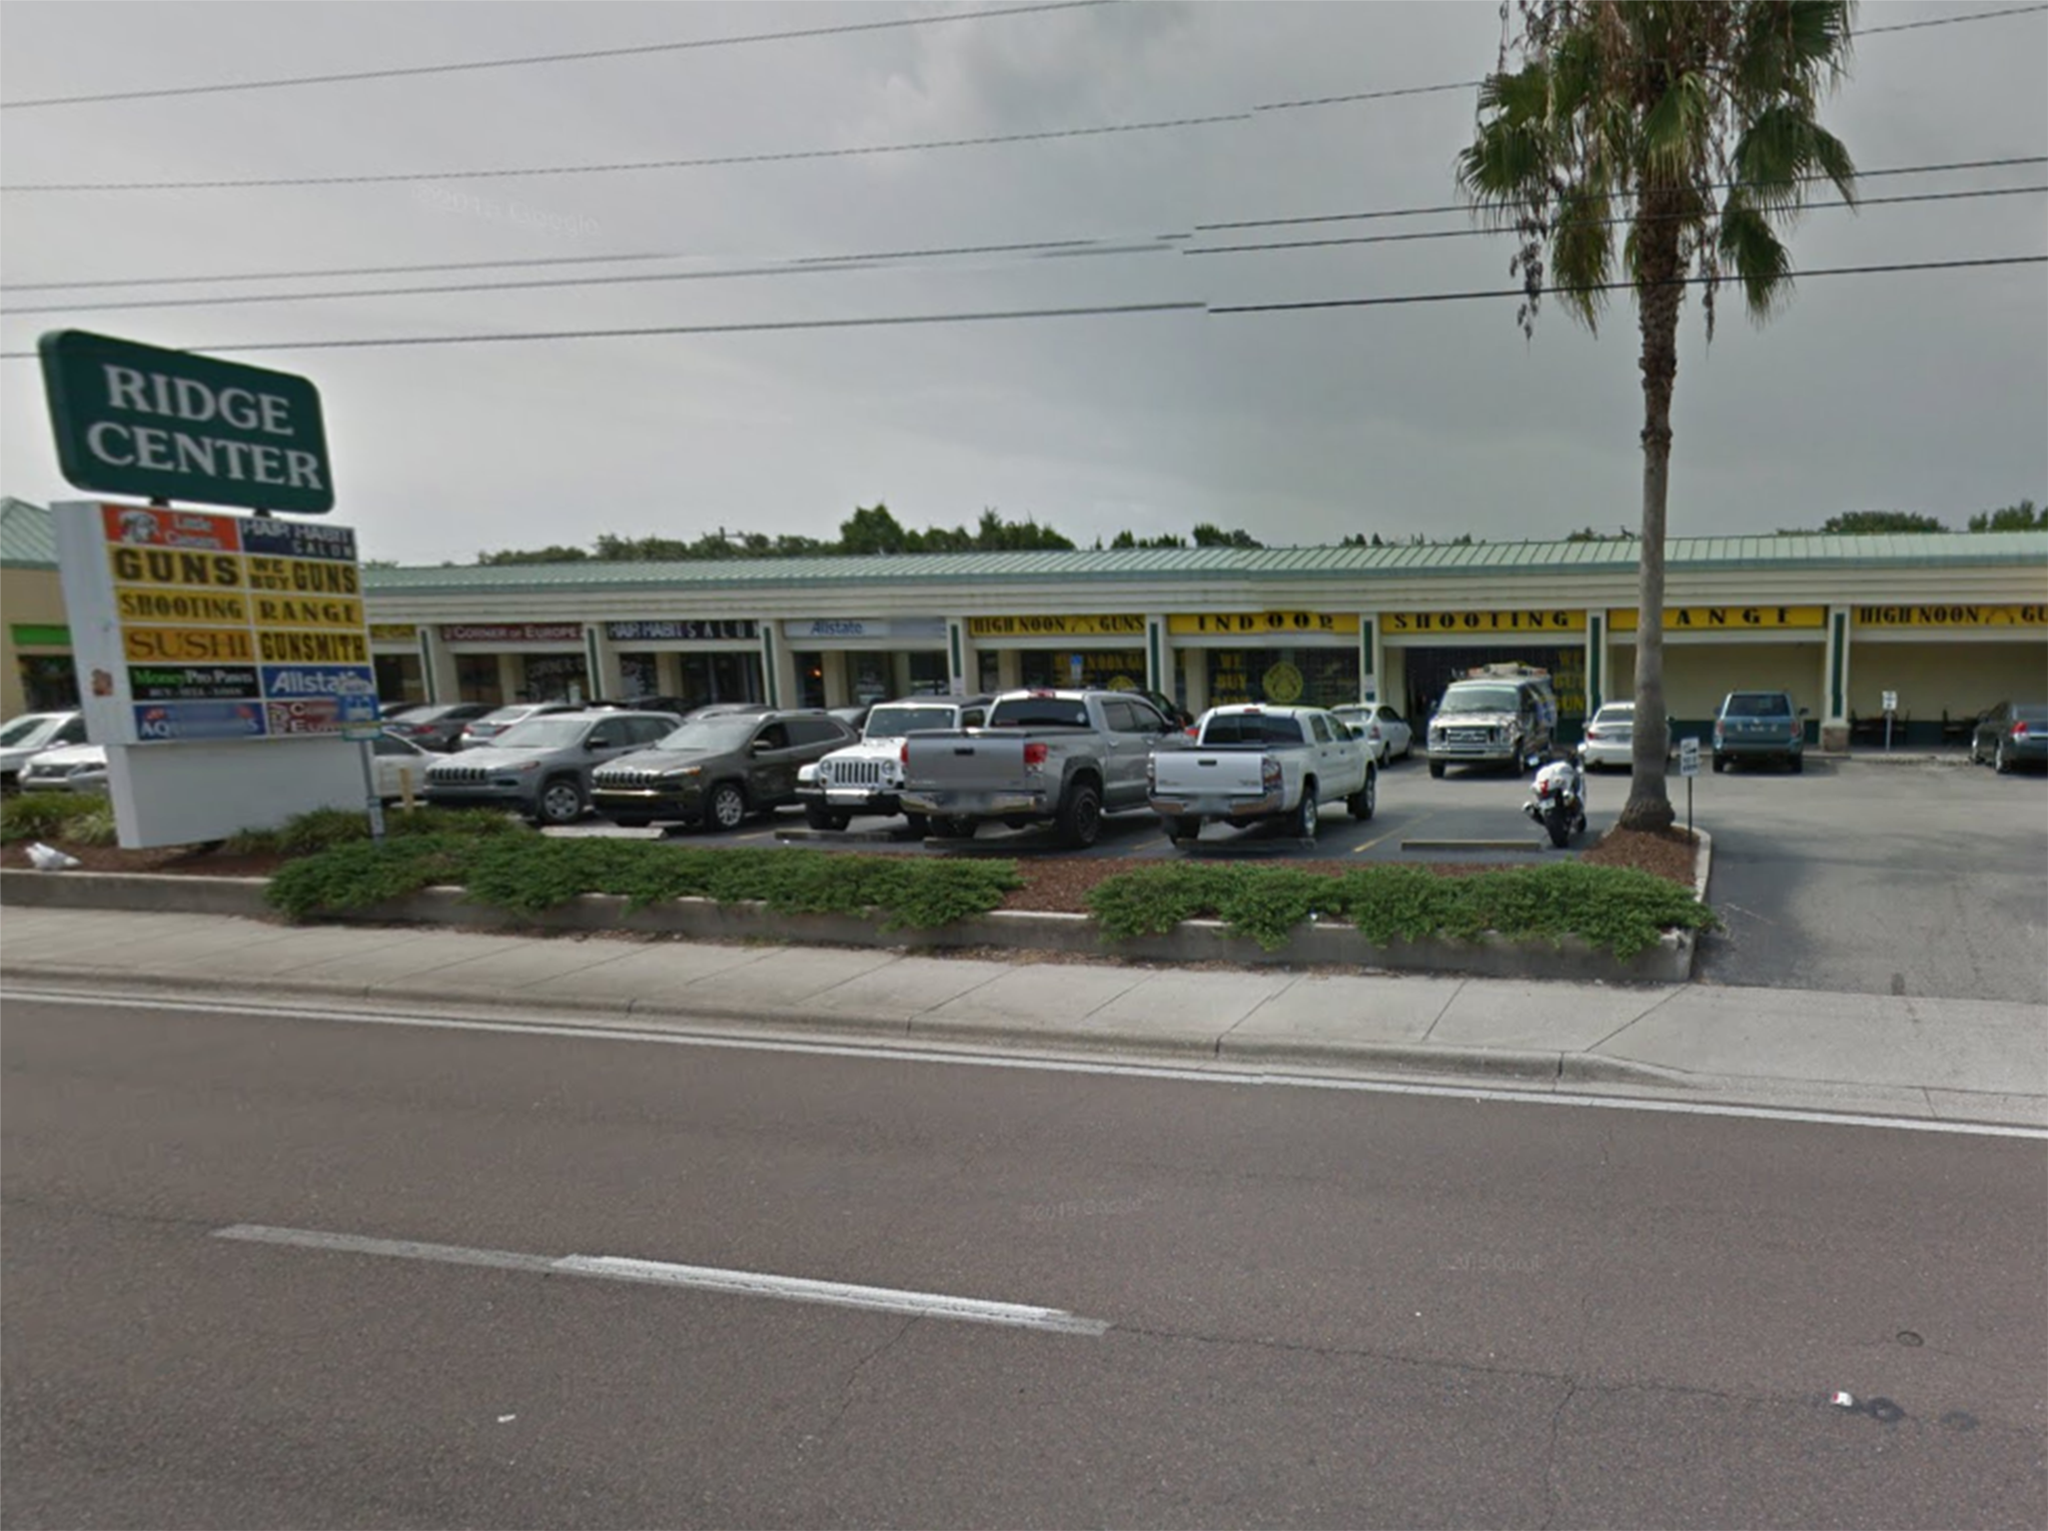 High Noon gun range in Sarasota, Florida where the accidental death occured